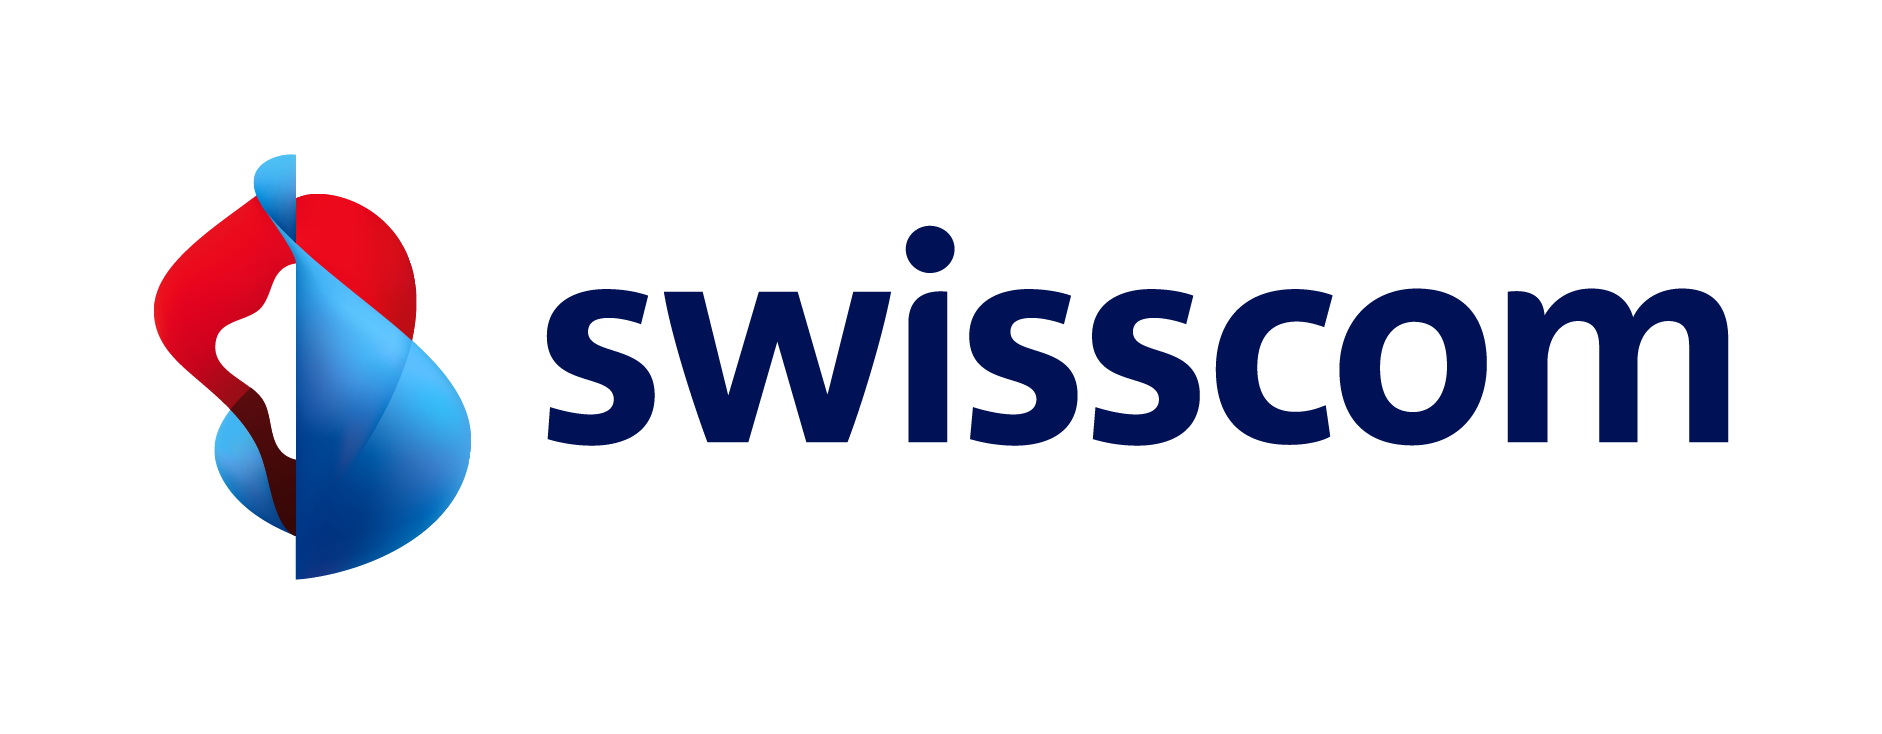 Swisscom Logos-1.png